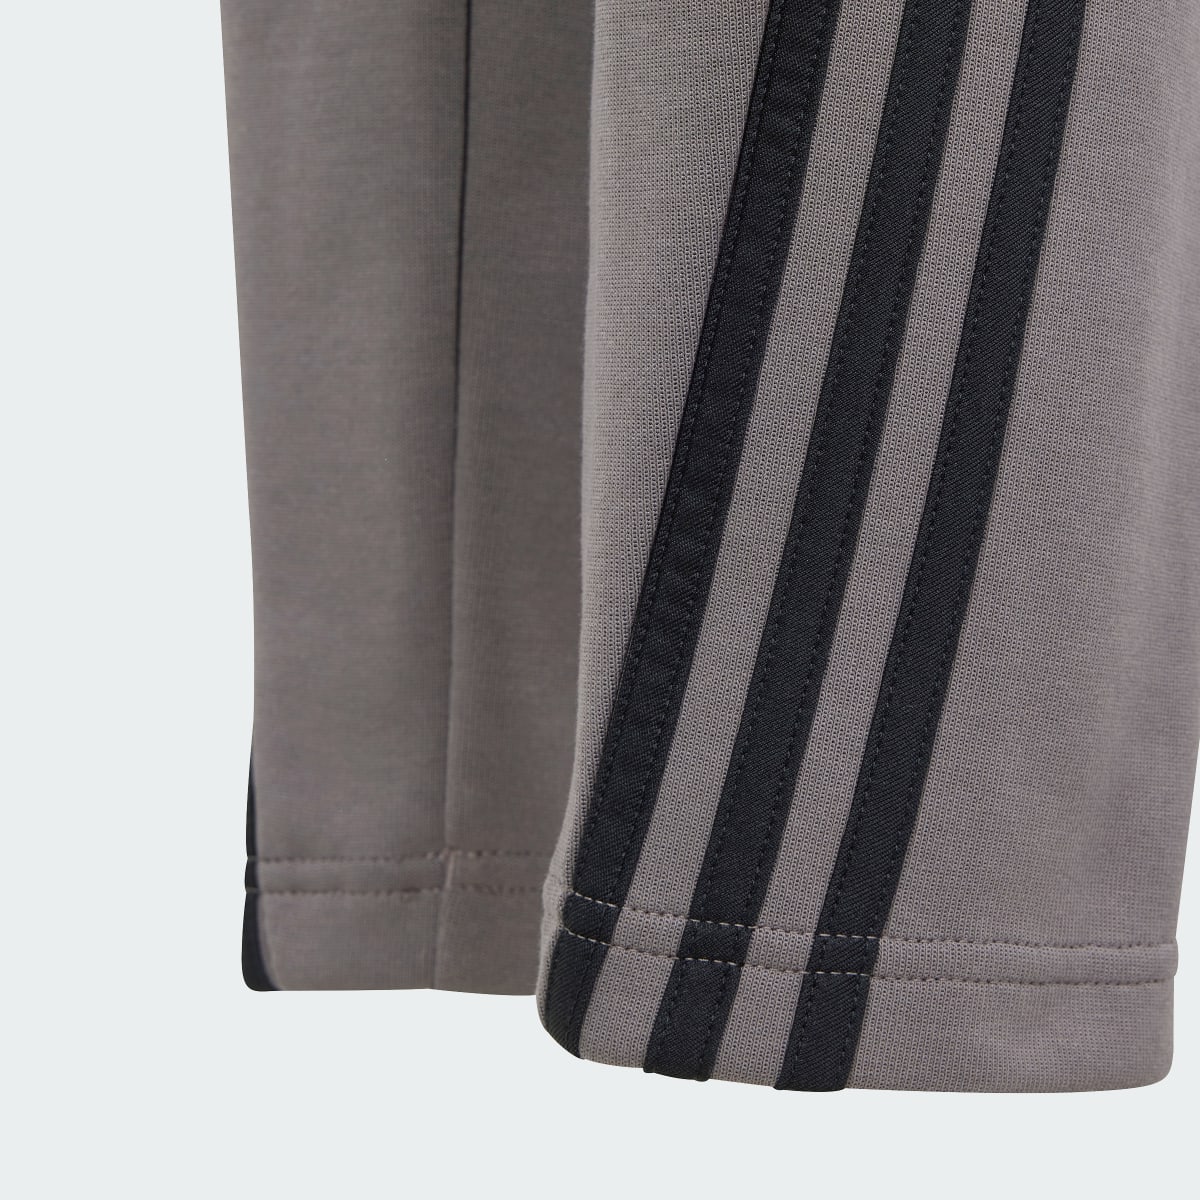 Adidas Future Icons 3-Stripes Ankle-Length Pants. 4